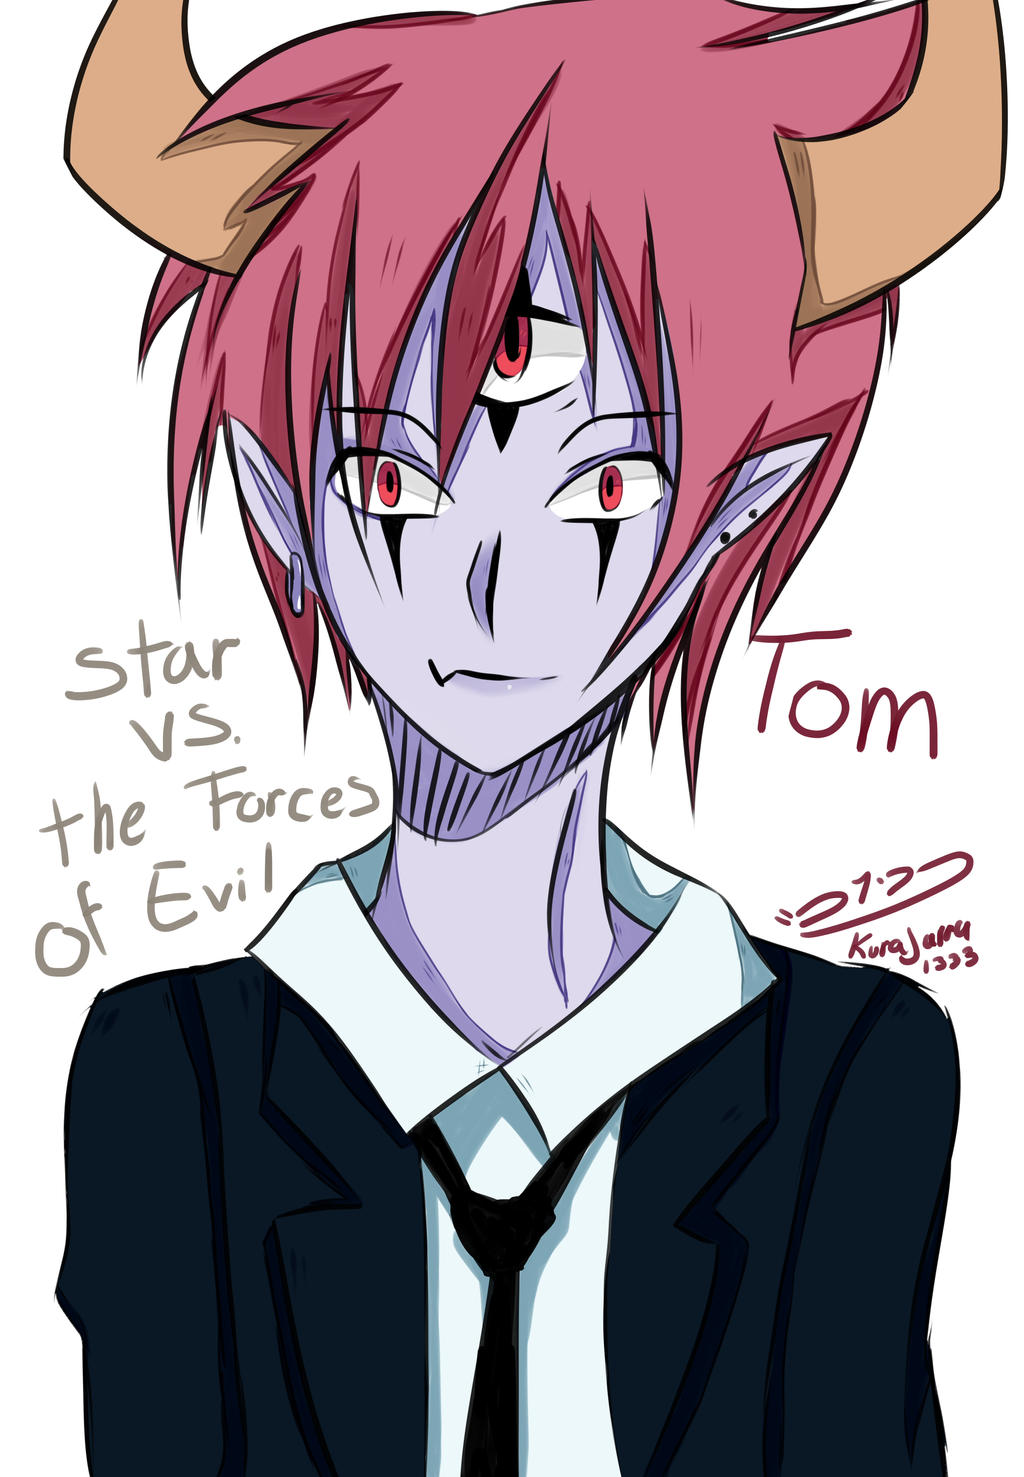 Star VS the Forces of evil - Tom by JuditG on DeviantArt